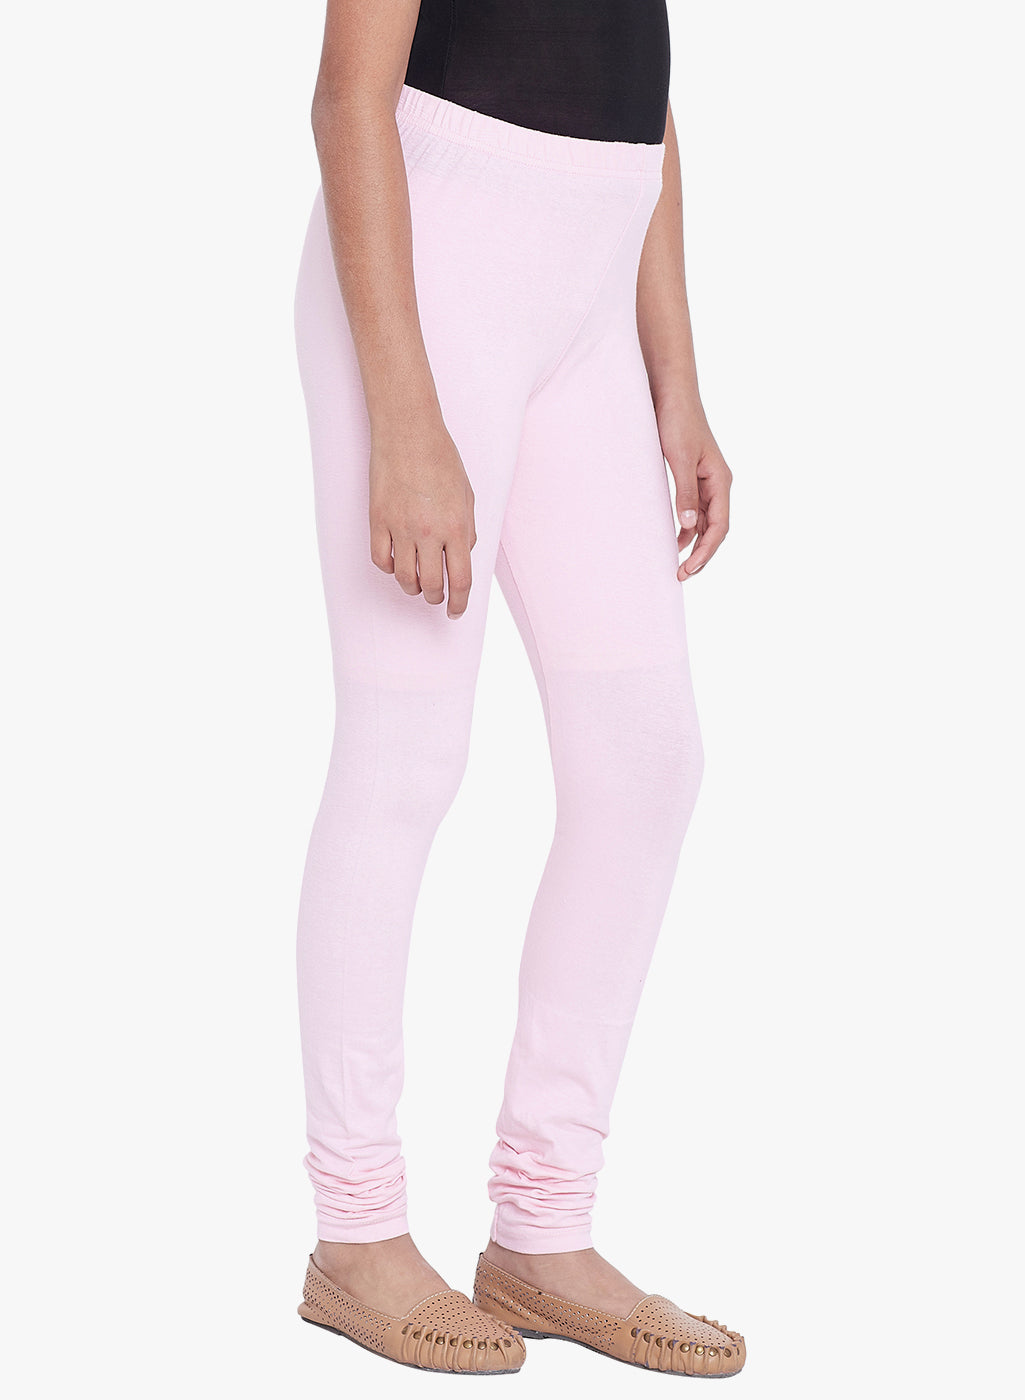 KaLI_store Work Pants for Women Women's Scrunch Lift Leggings Seamless  Tights Squat Proof Tummy Control Yoga Pants Pink,L - Walmart.com